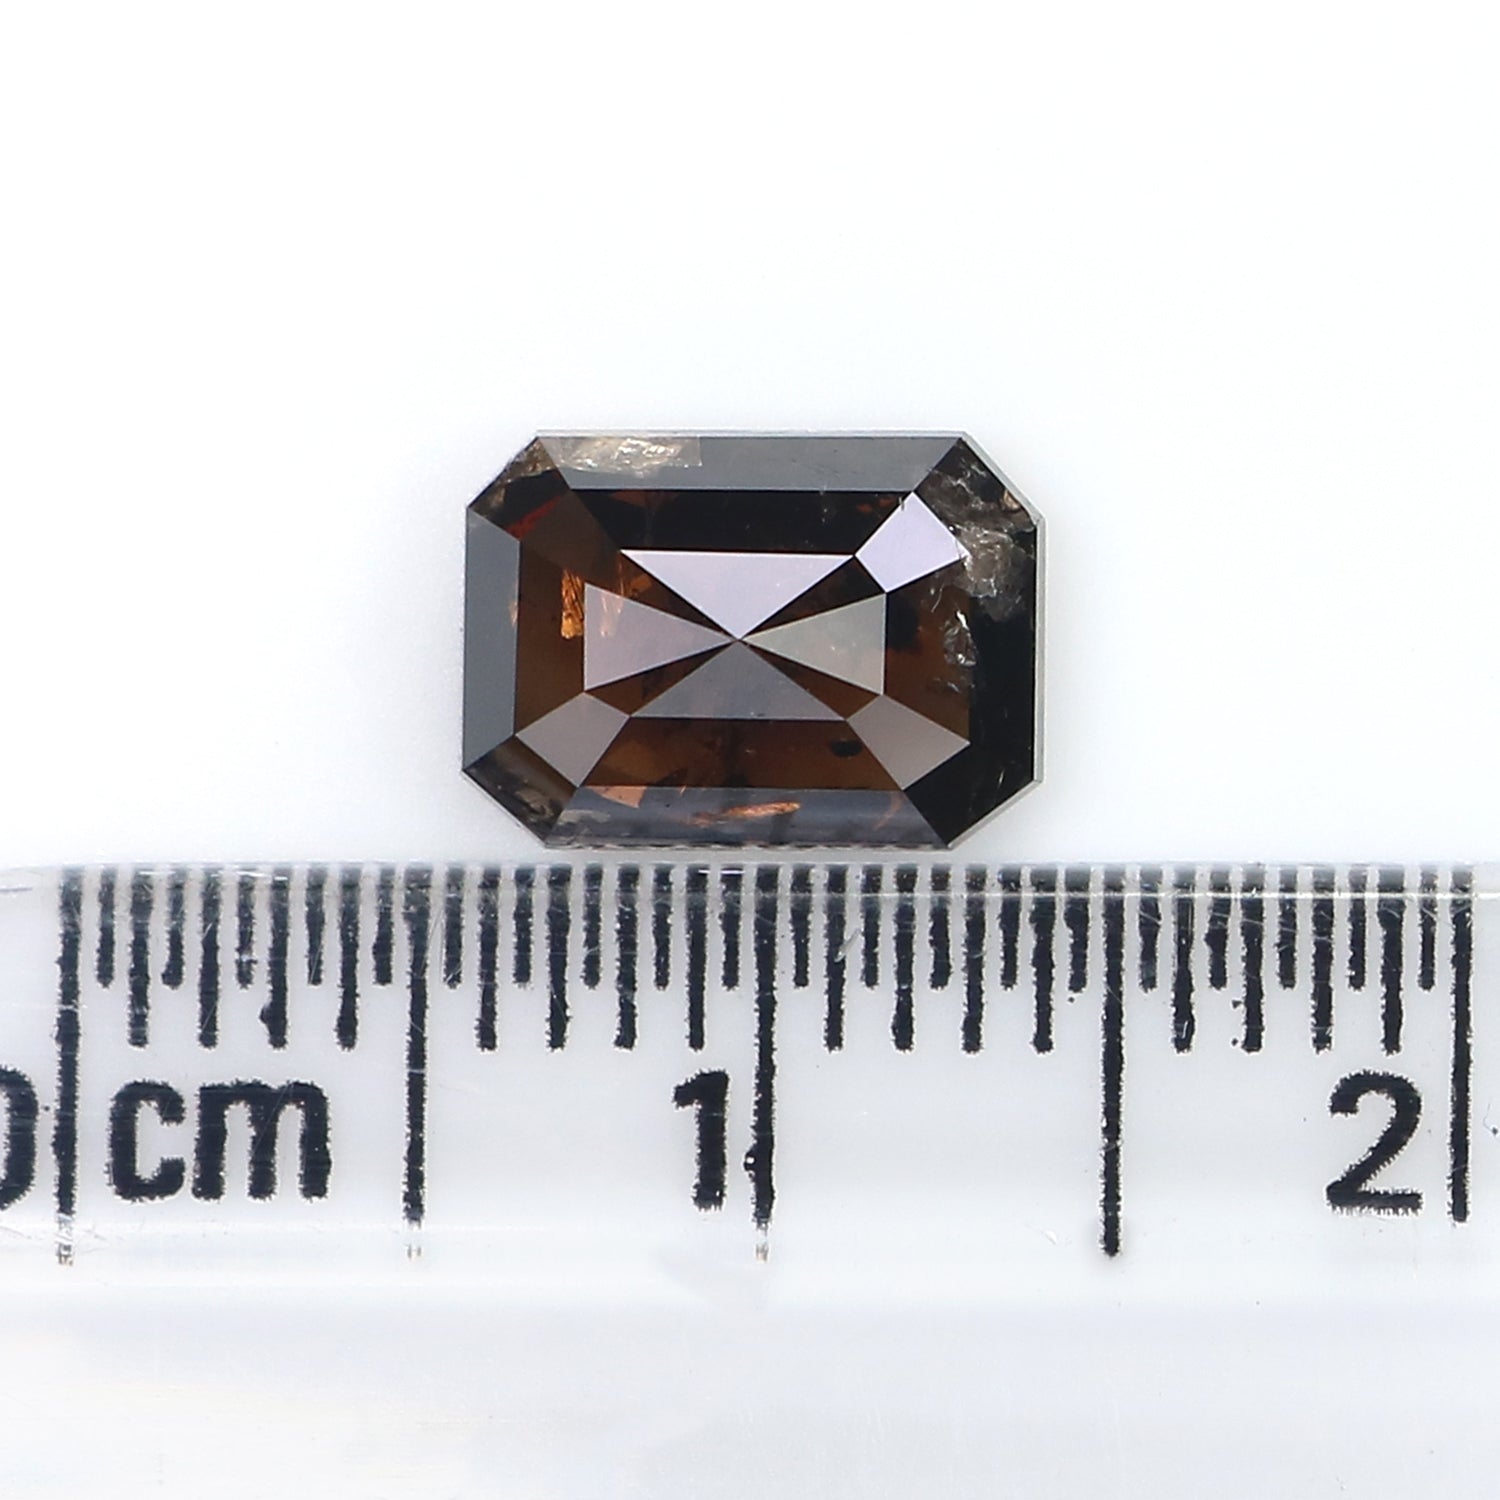 Natural Loose Emerald Diamond, Brown Color Diamond, Natural Loose Diamond, Emerald Rose Cut Diamond, 1.93 CT Emerald Shape Diamond KDL9595